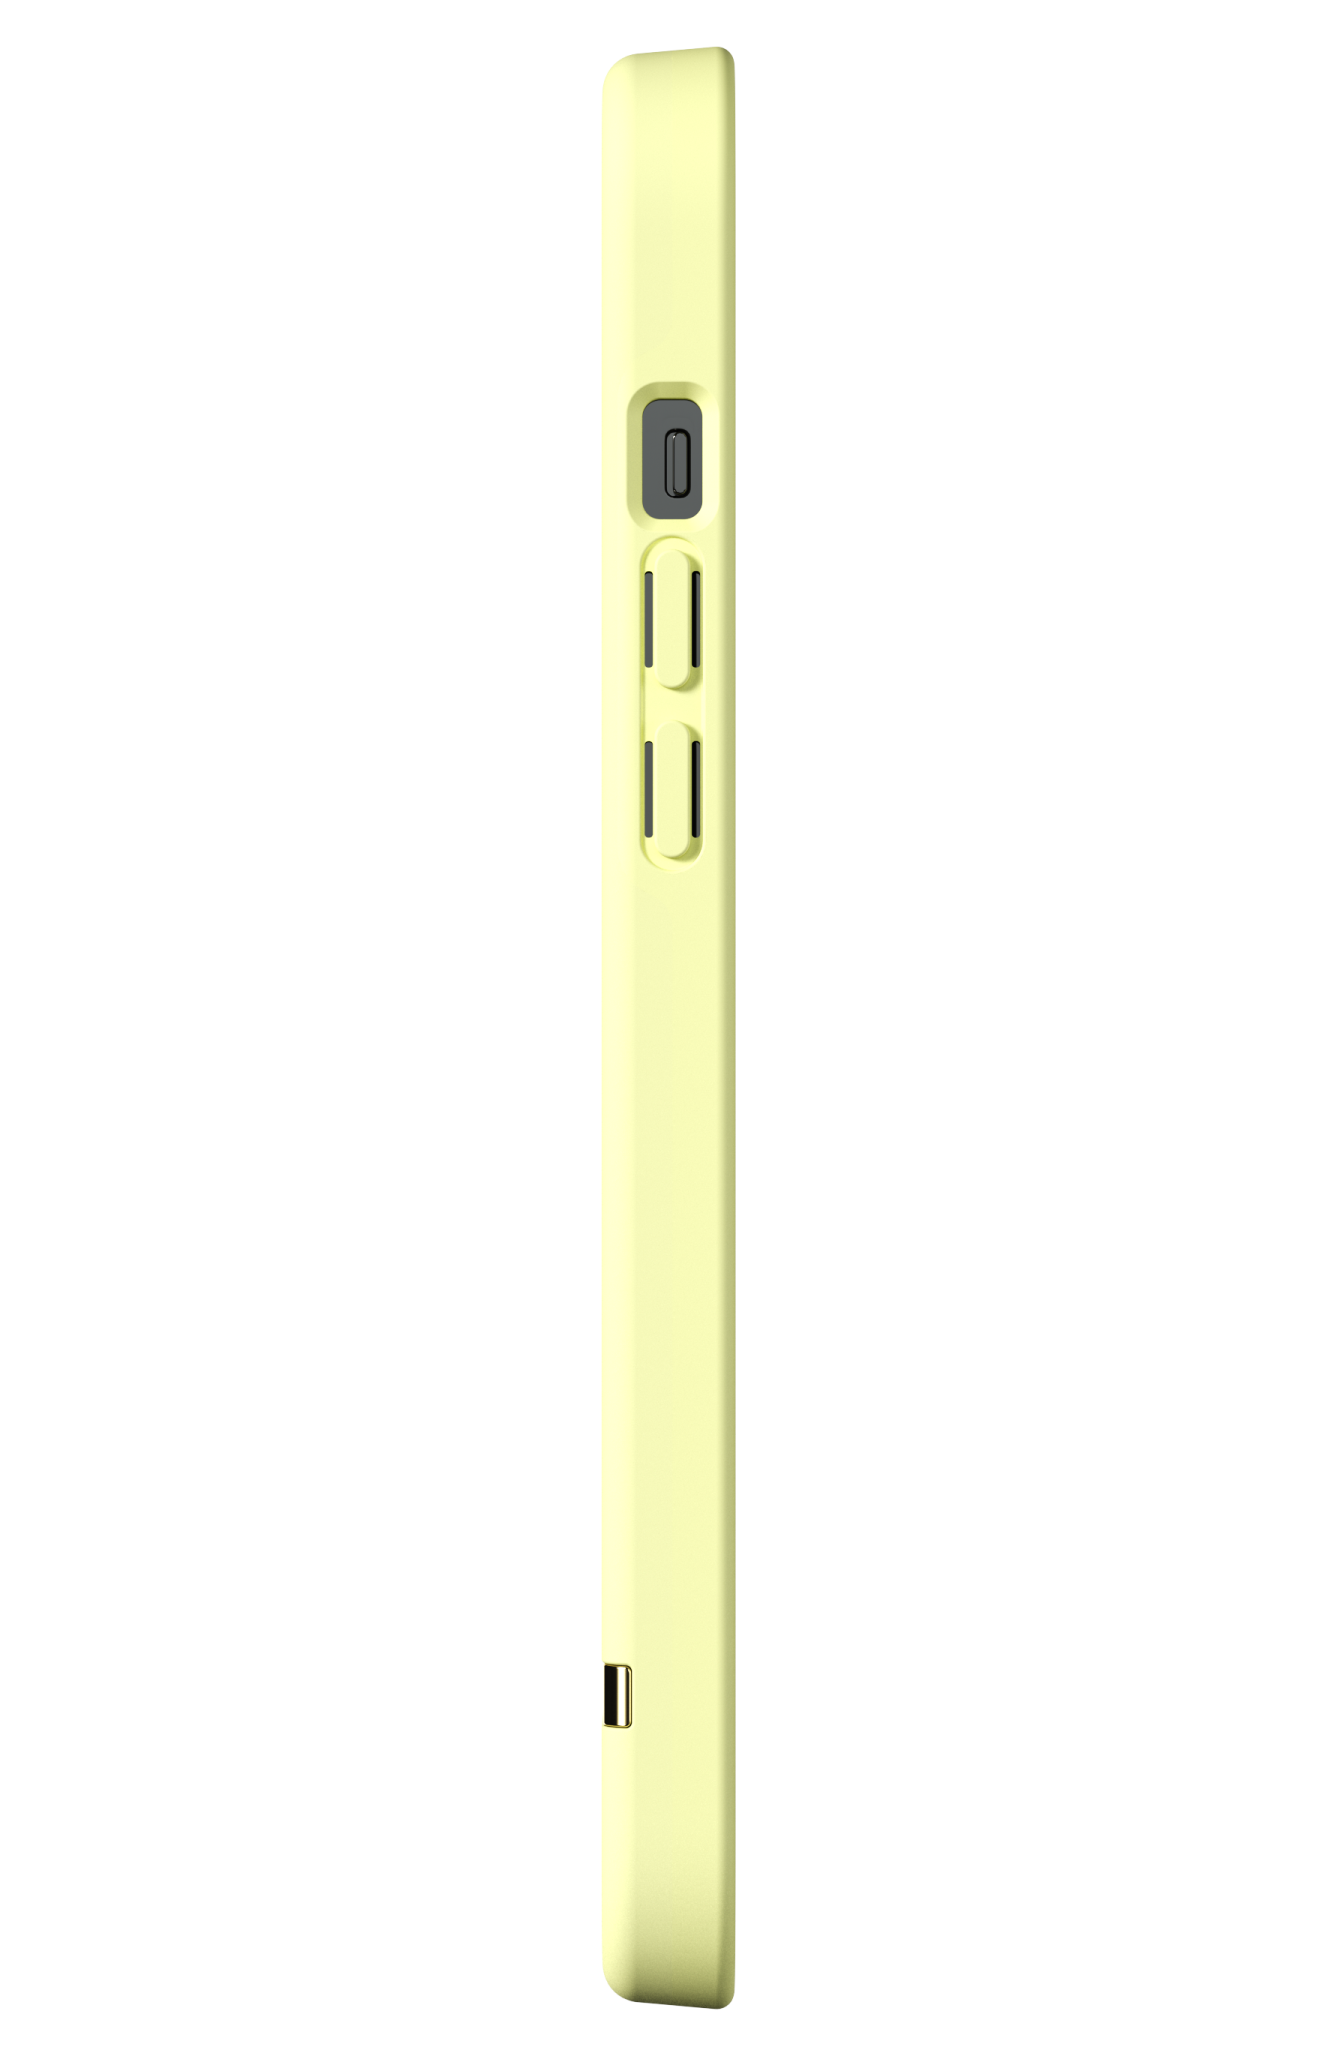 iPhone Limone Case